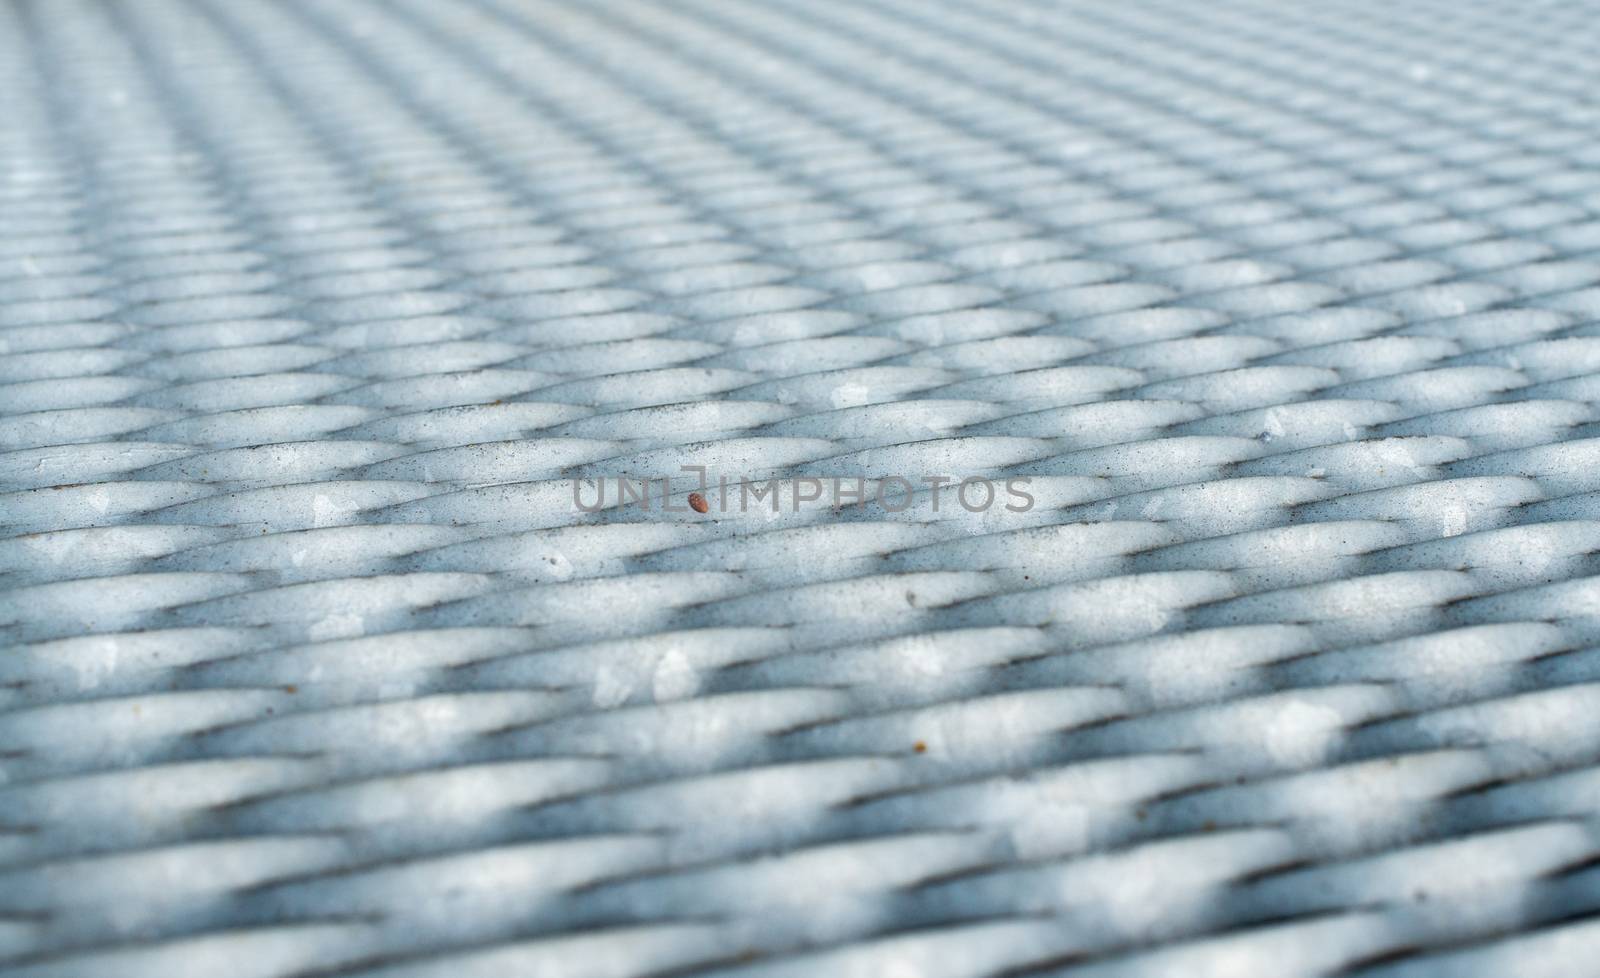 The gray metal mesh surface. Close up.